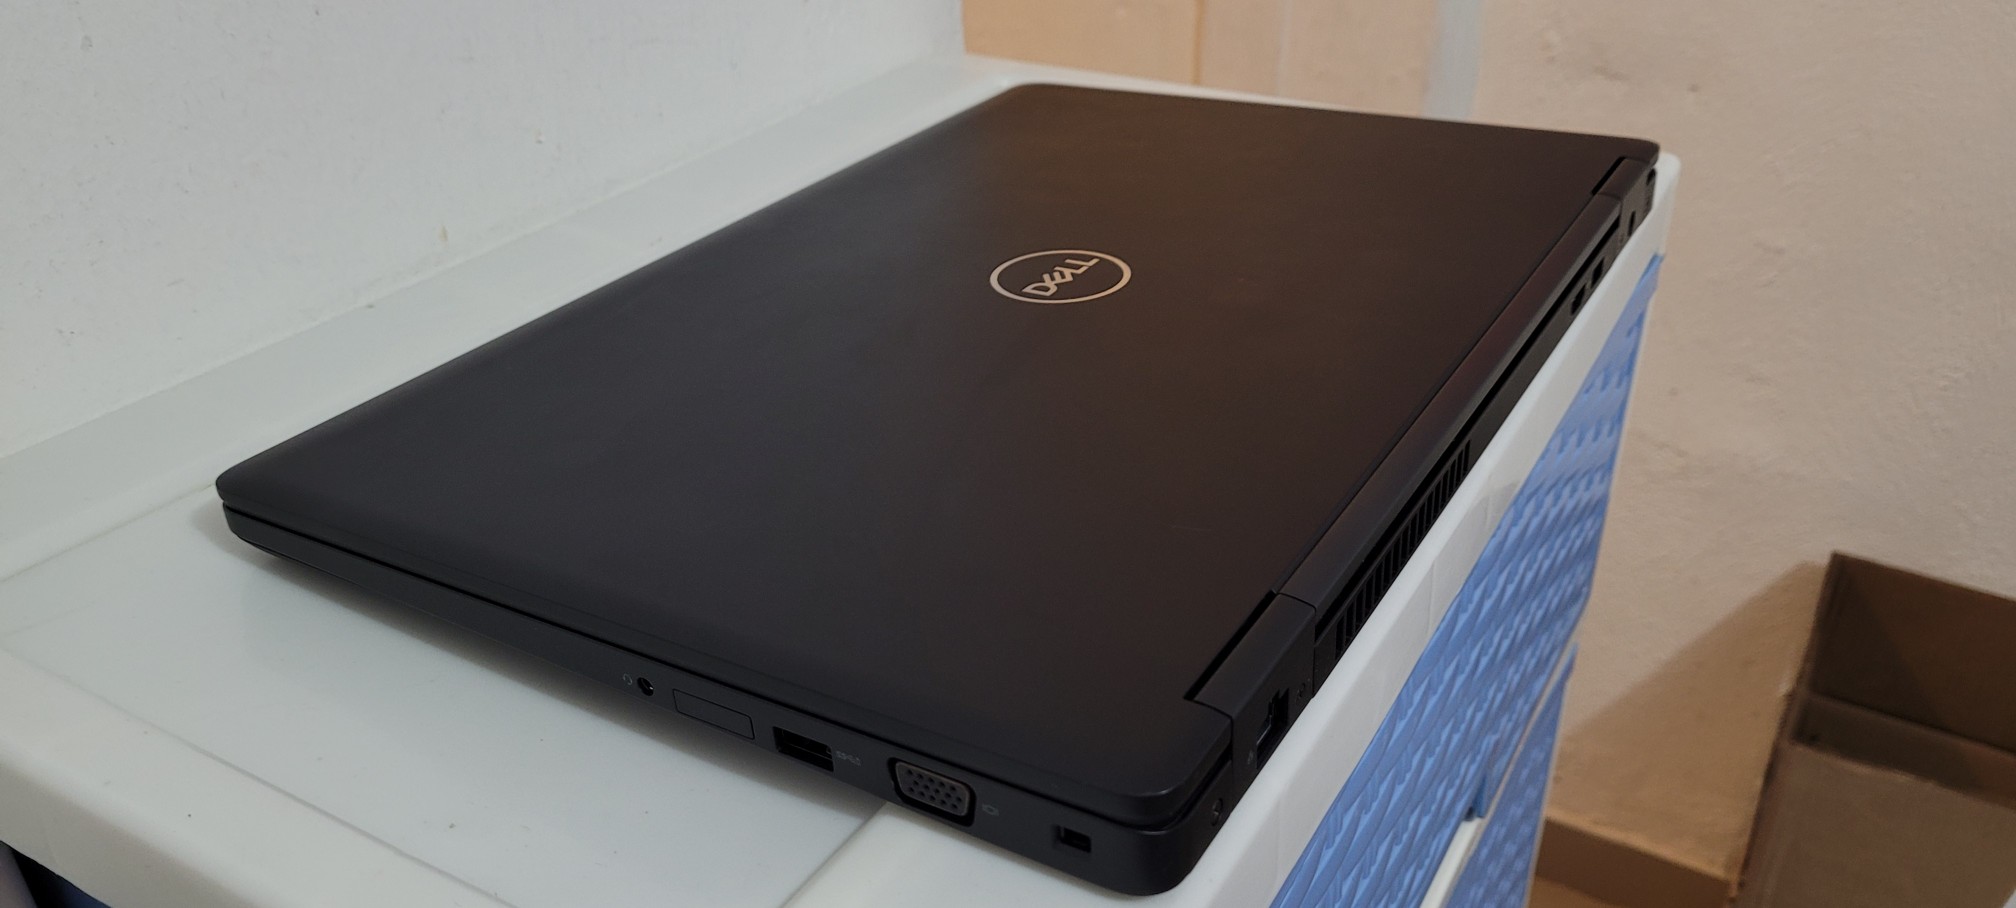 computadoras y laptops - Dell 5570 17 Pulg Core i7 6ta Ram 16gb Disco 256gb SSD Video 8gb 2